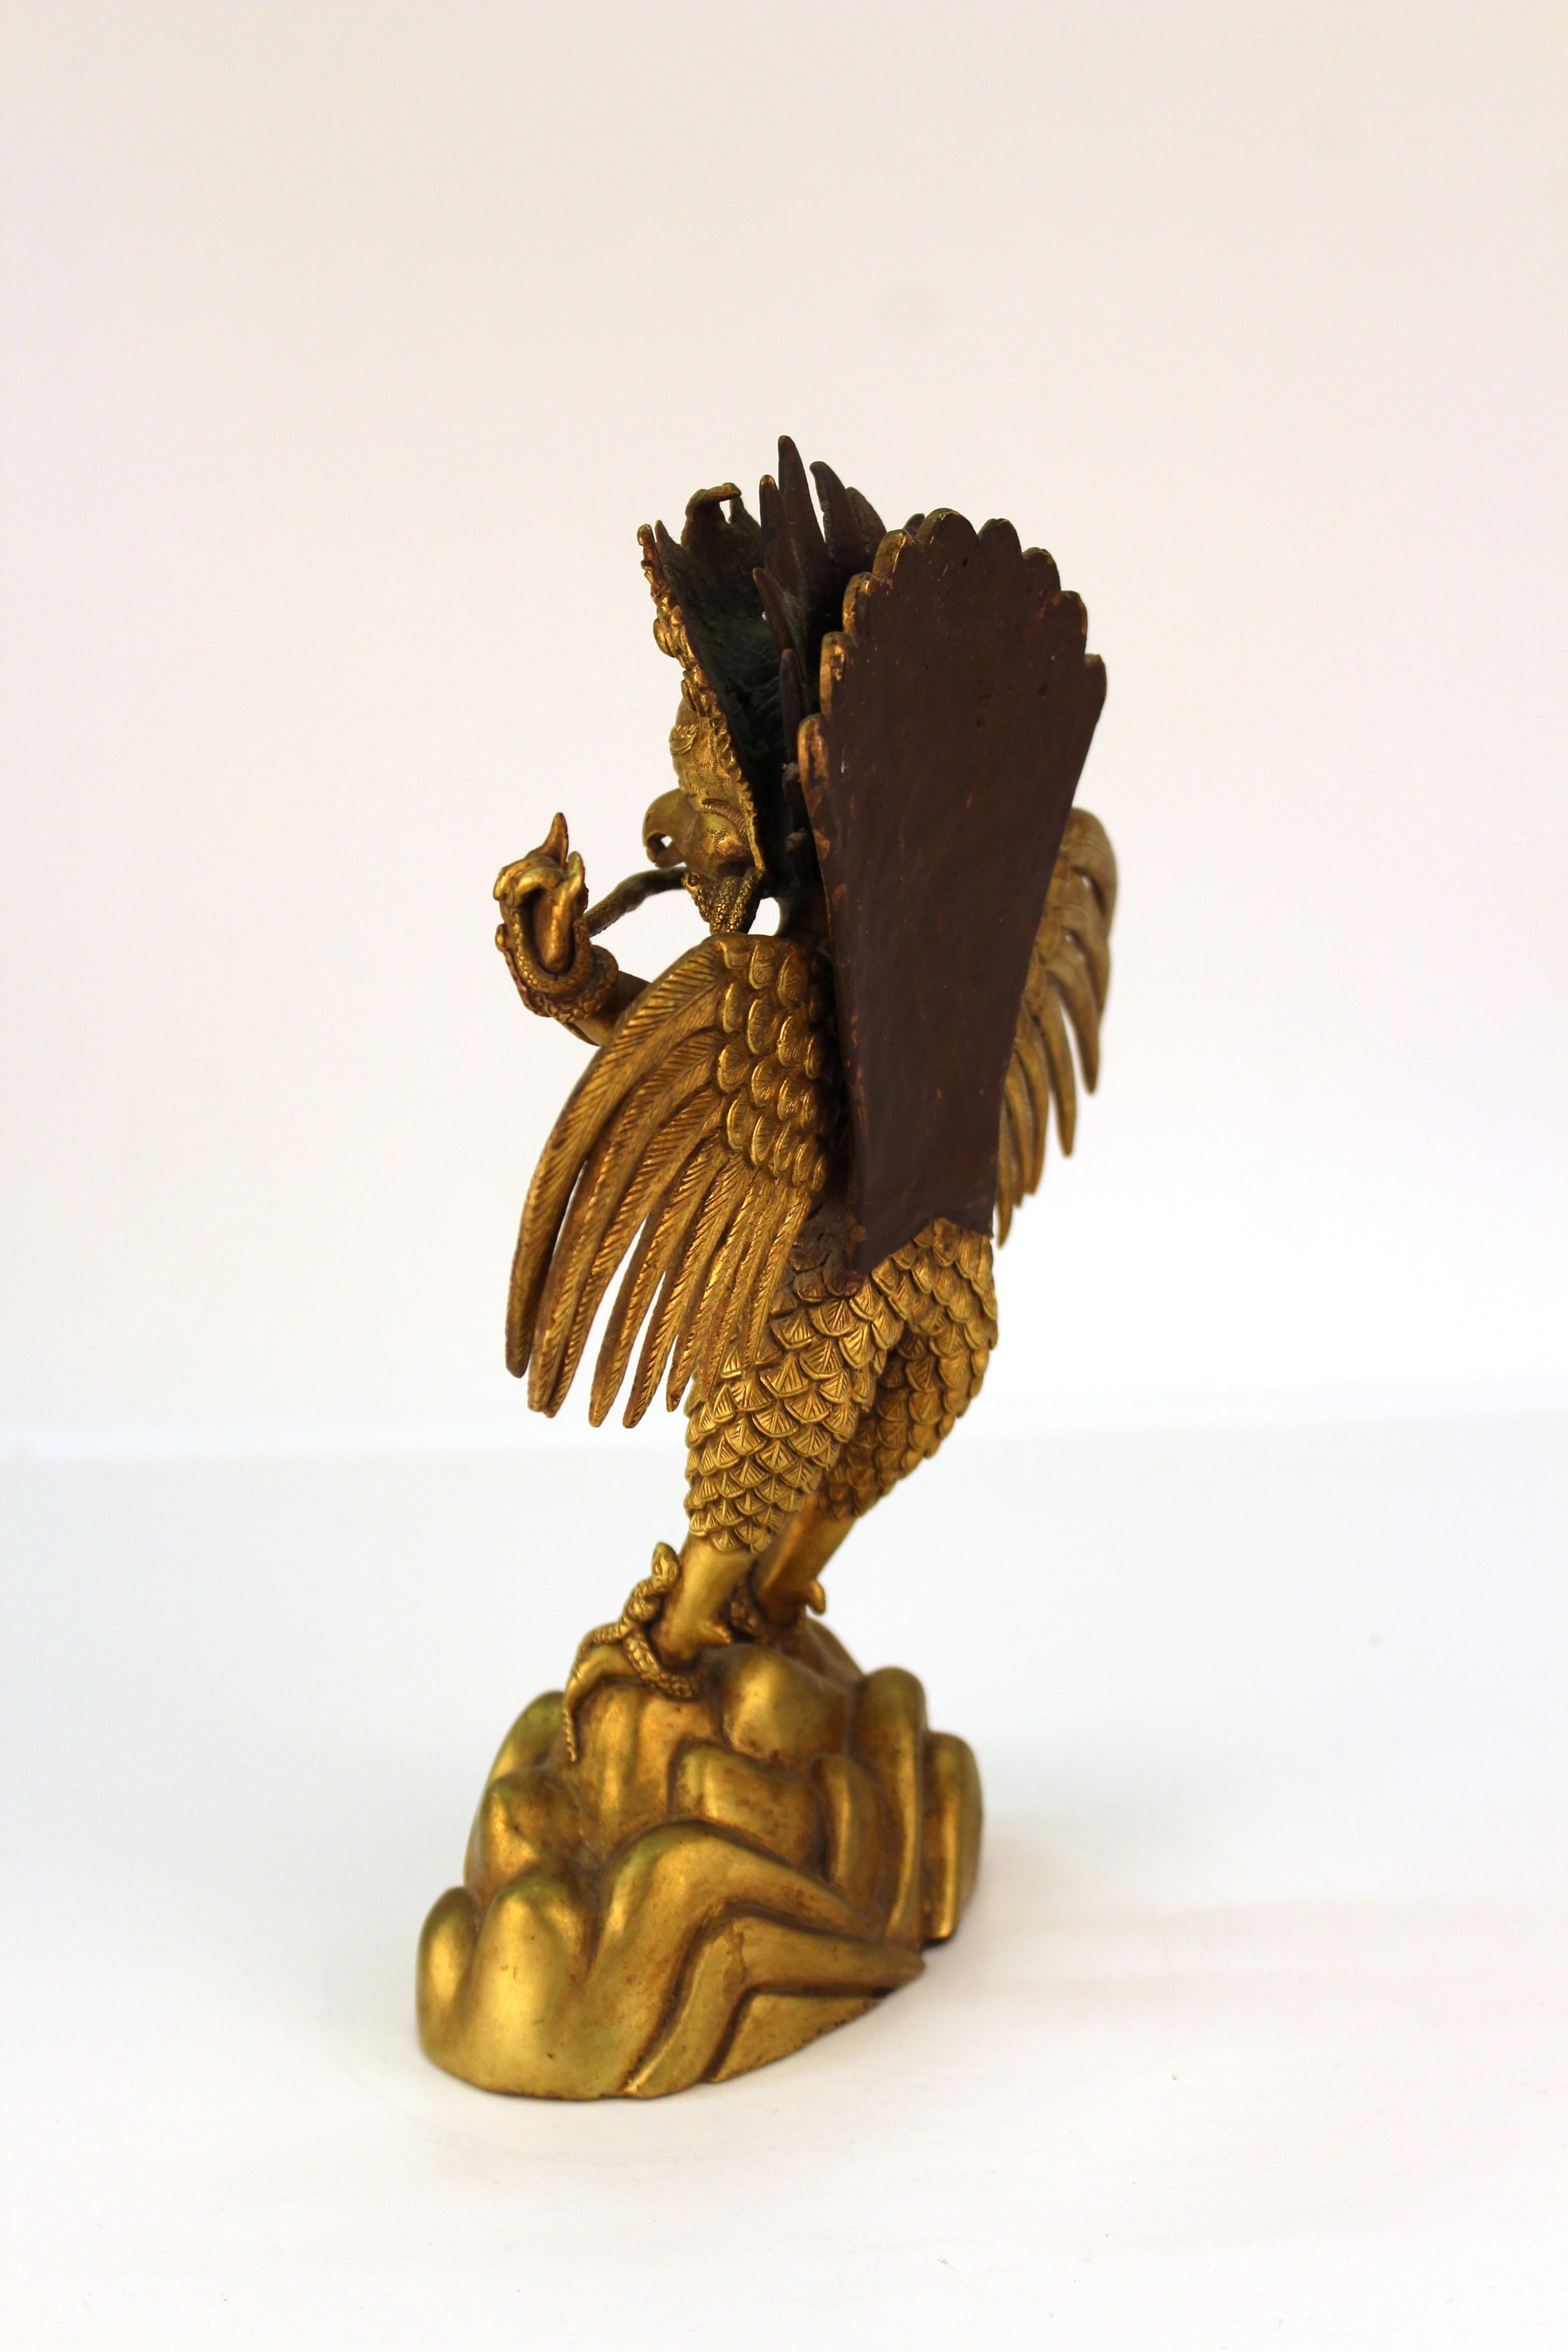 20th Century Chinese or Tibetan Gilt Bronze Garuda with Naga Sculpture